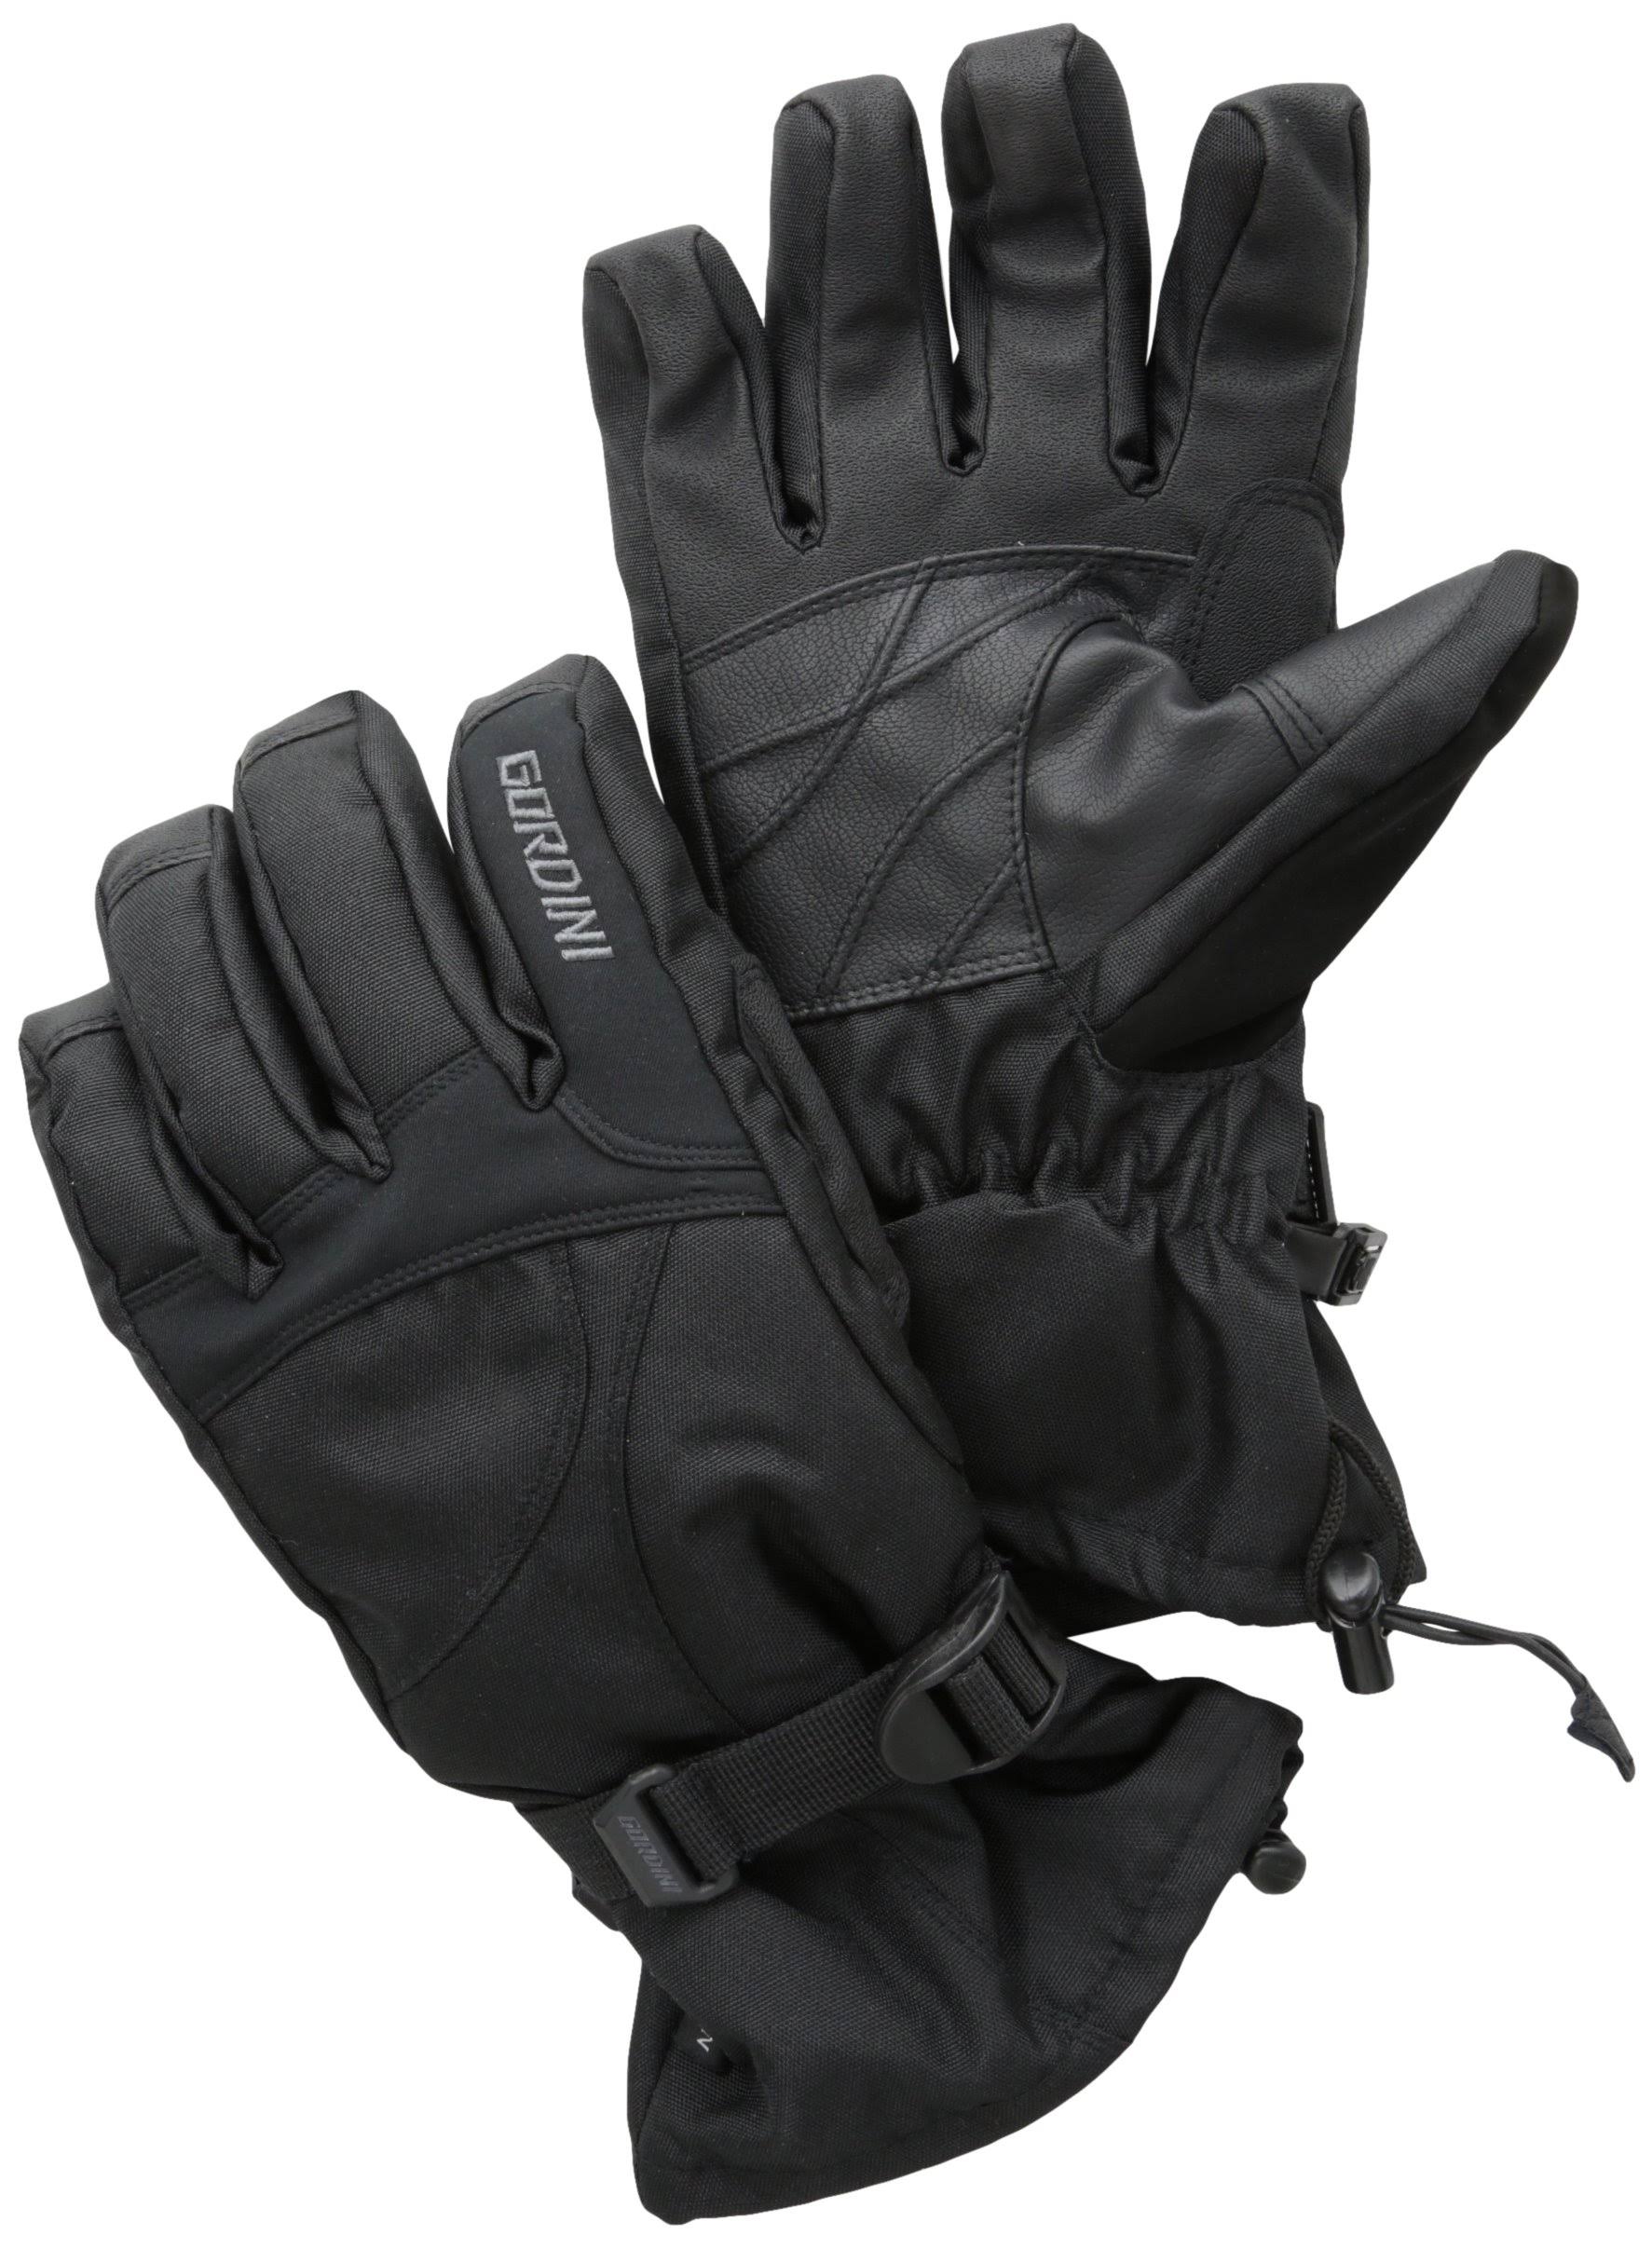 Gordini Men's Aquabloc Down Gauntlet Ii Gloves - Black, Large